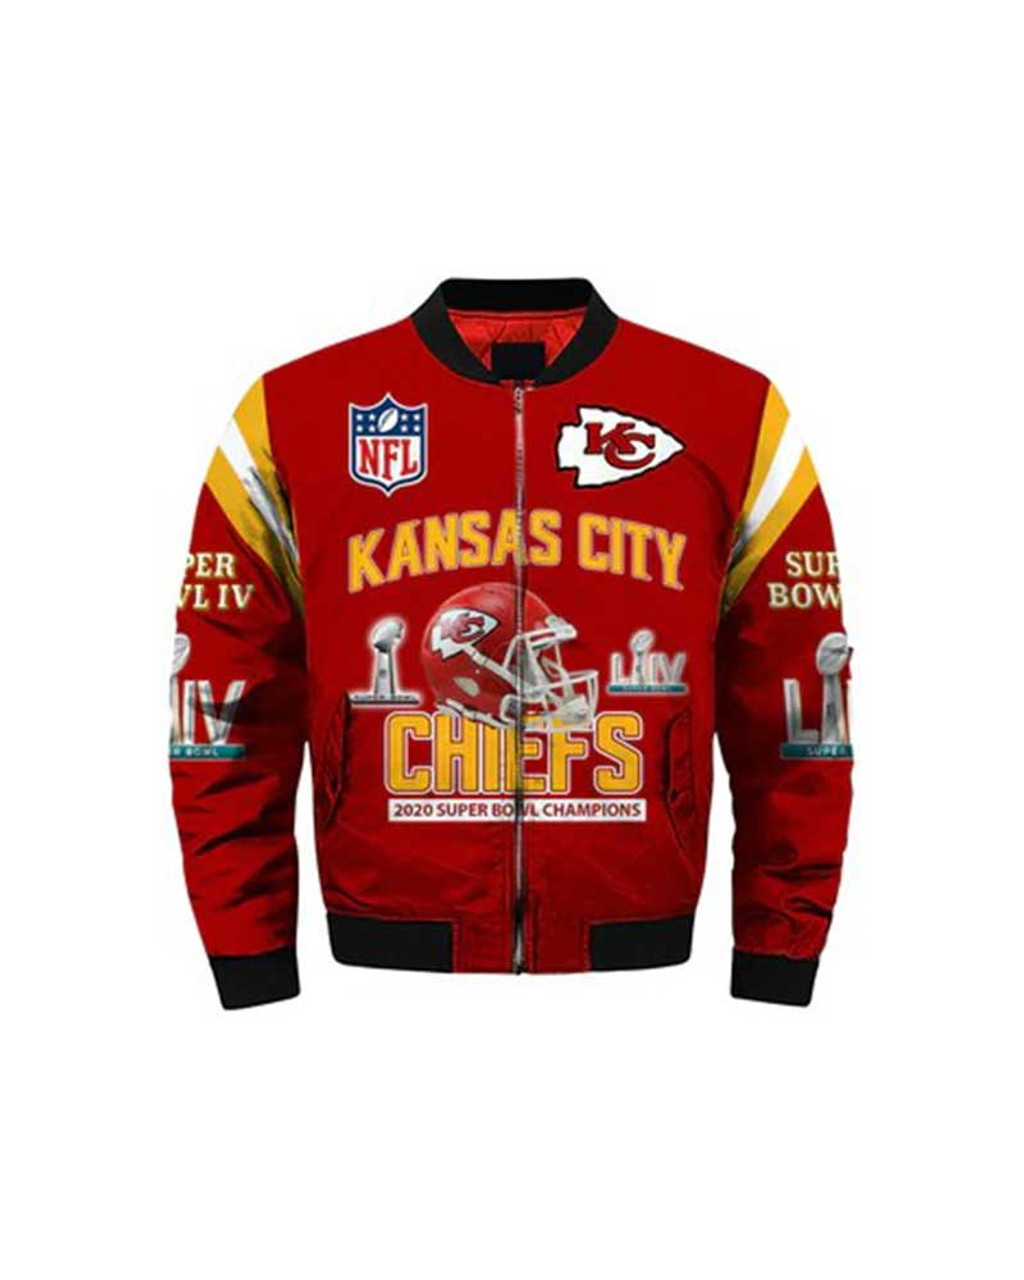 https://cdn11.bigcommerce.com/s-xku293zif5/images/stencil/1280x1280/products/5643/11155/Kansas-City-Chiefs-Super-Bowl-Champions-Jacket__02224.1676885704.jpg?c=2?imbypass=on